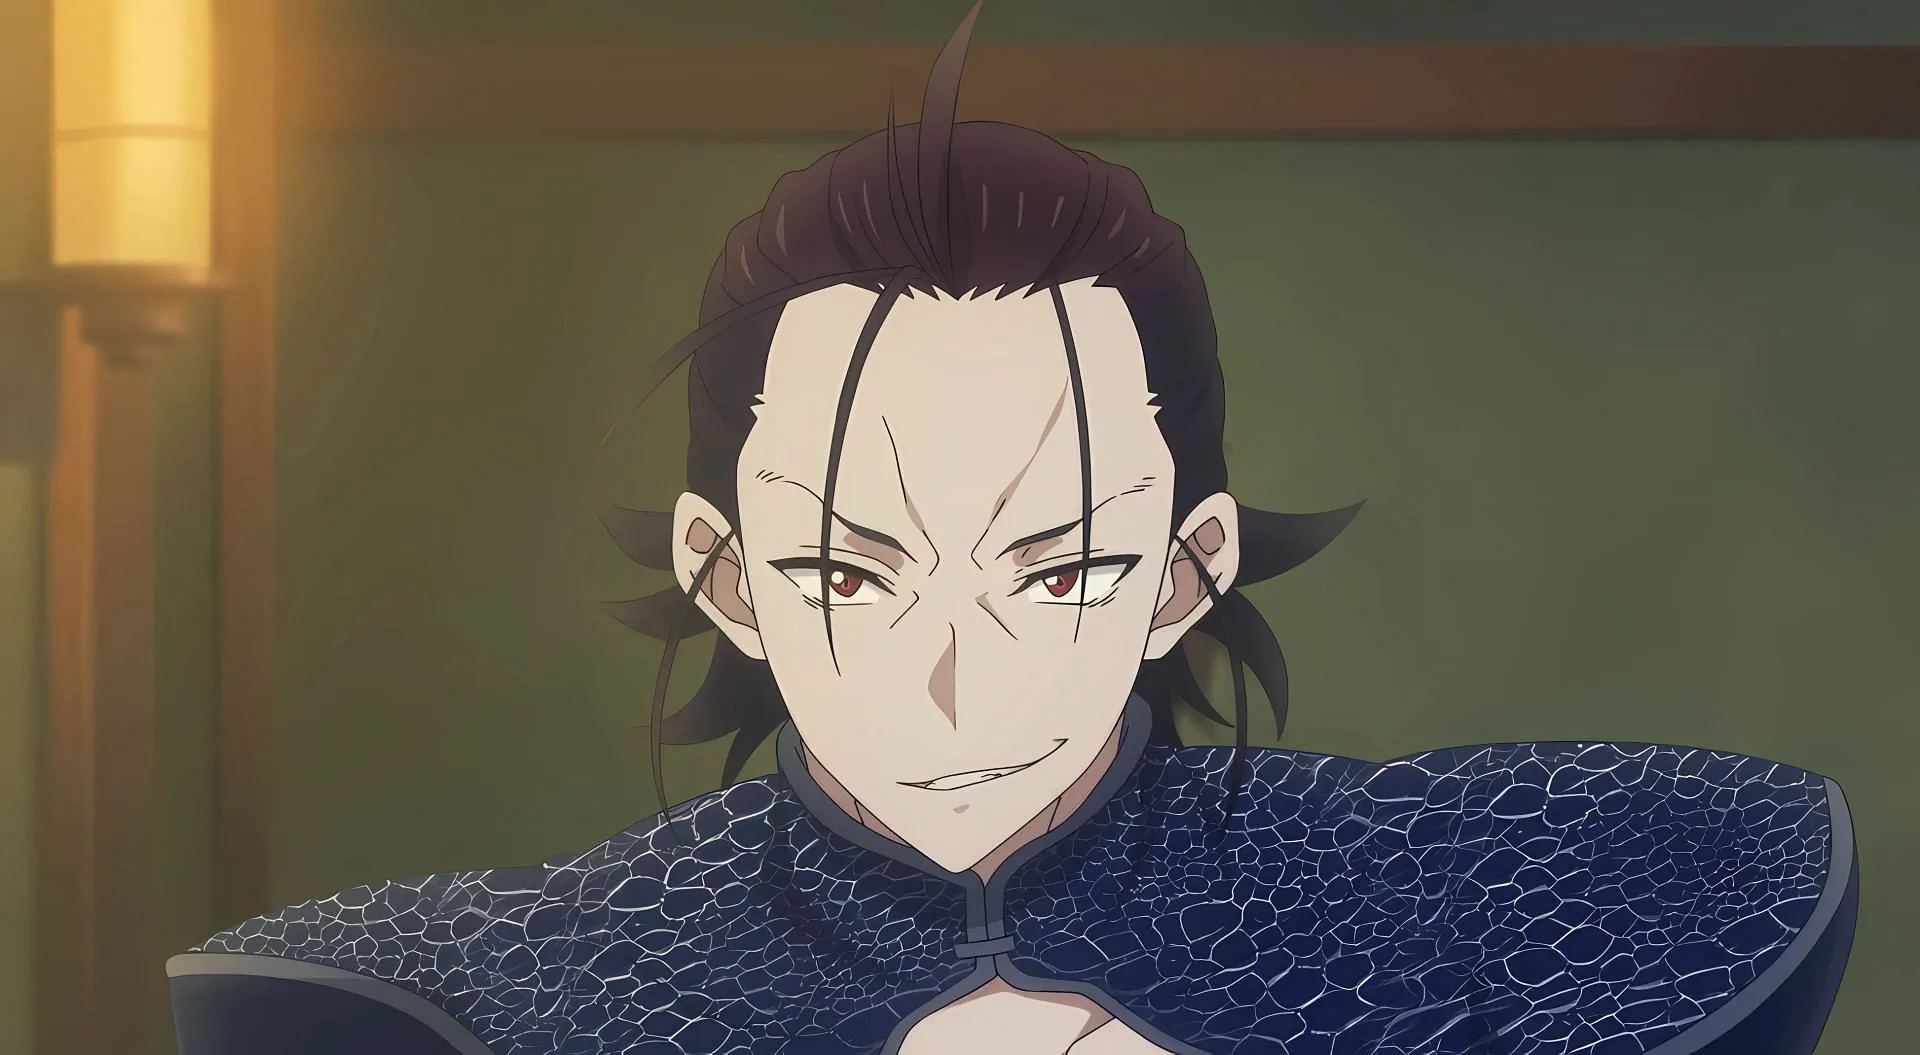 Wilhelm as seen in the anime (Image via Yokohama Animation Lab & Cloud Hearts)